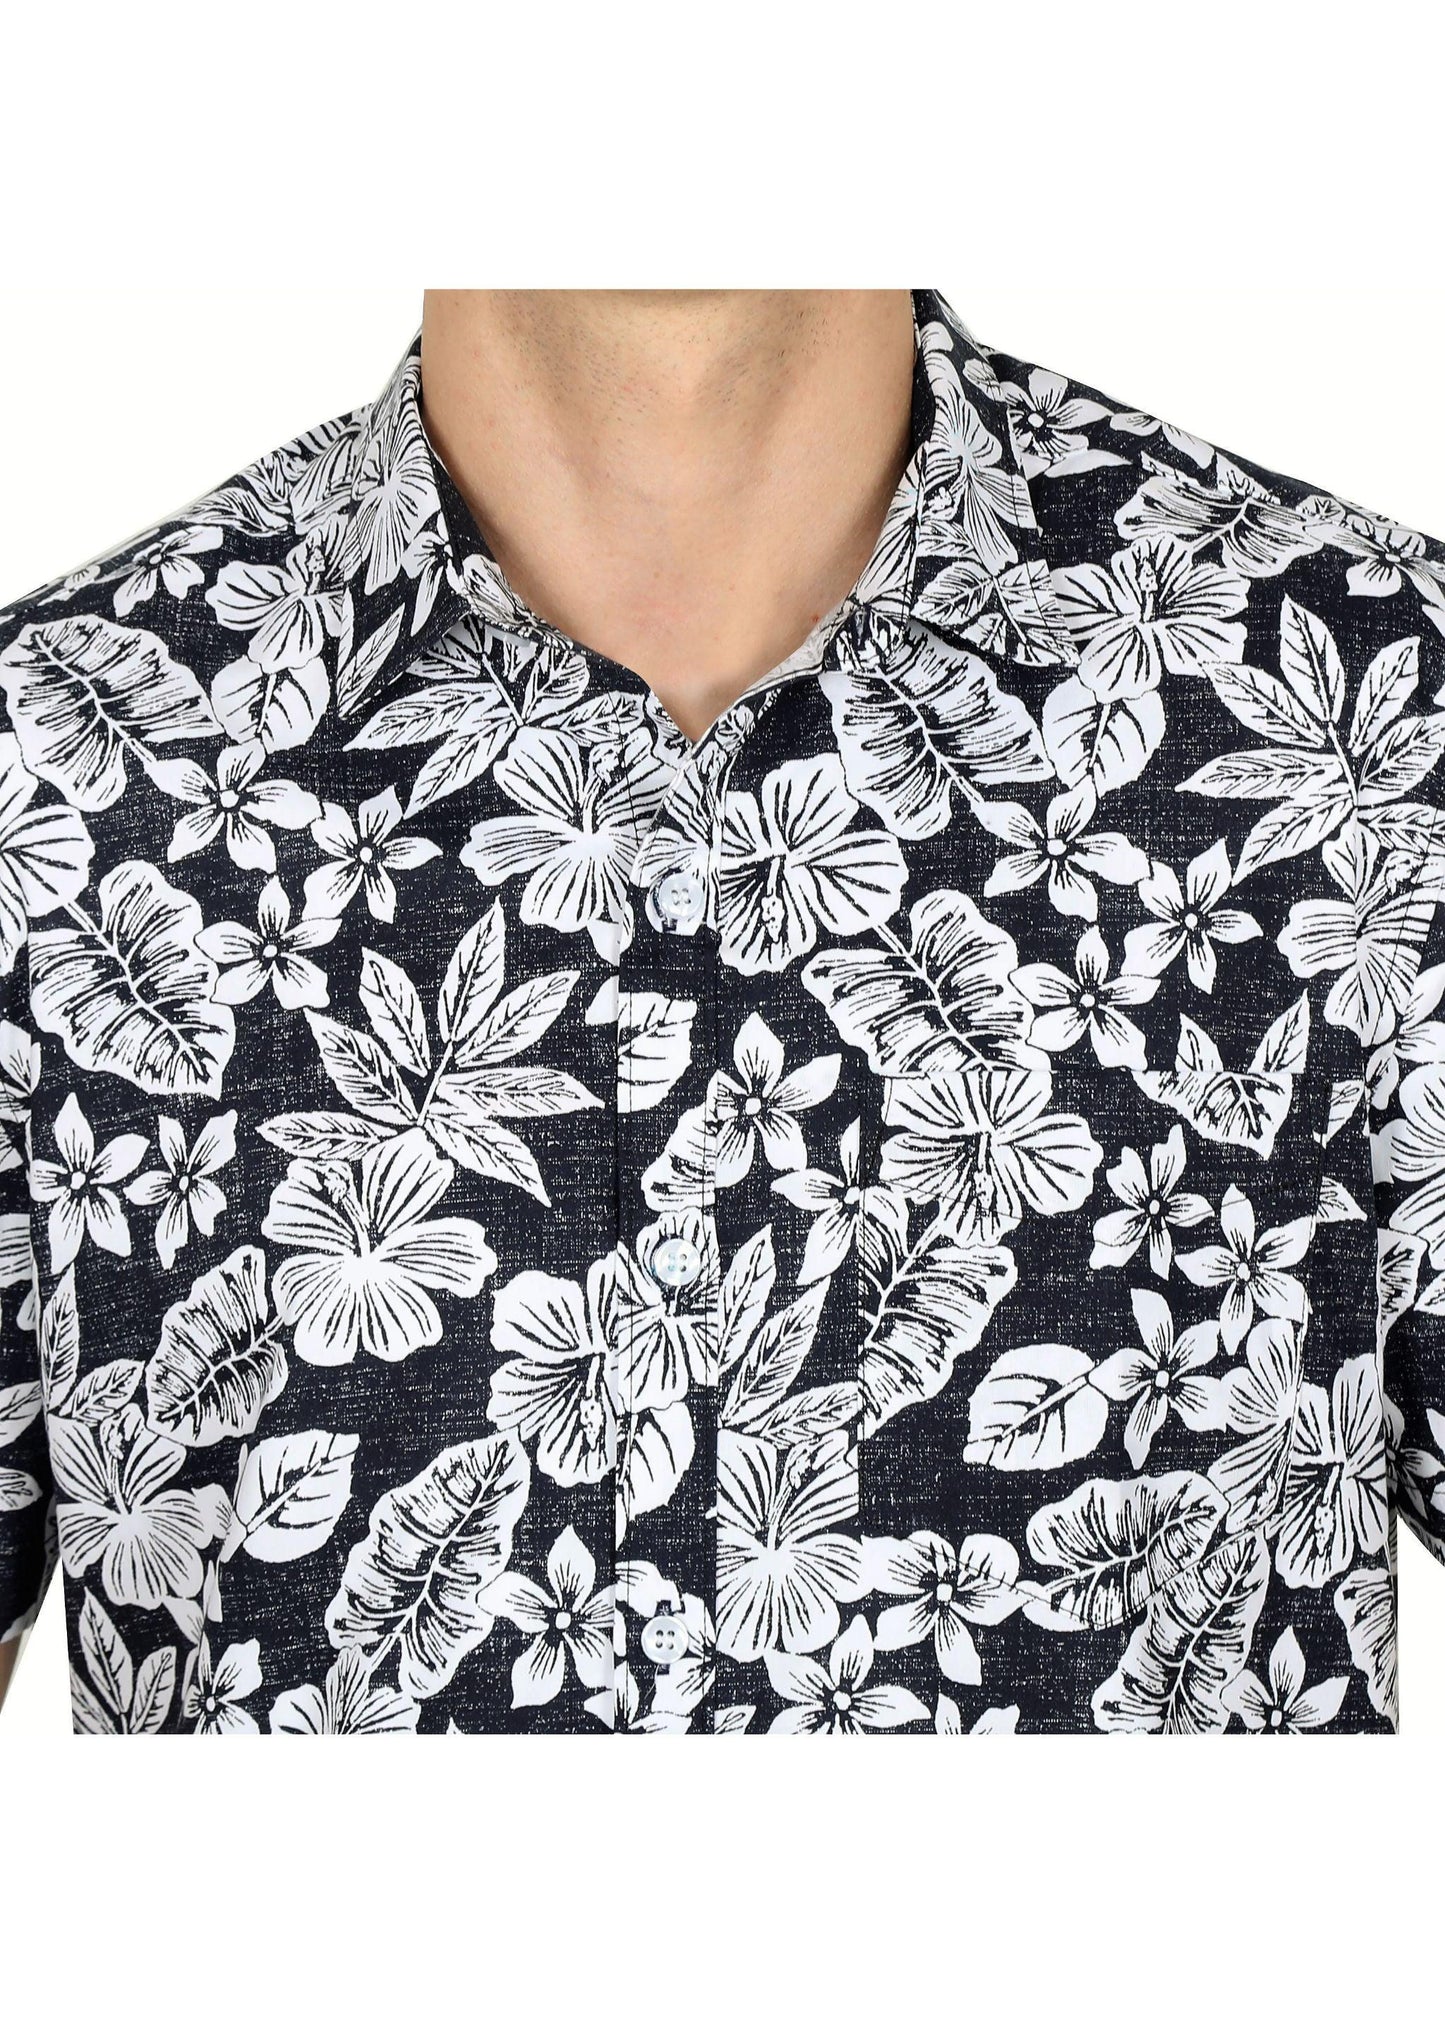 Tusok-black-magicVacation-Printed Shirtimage-Black Roop Floral (3)